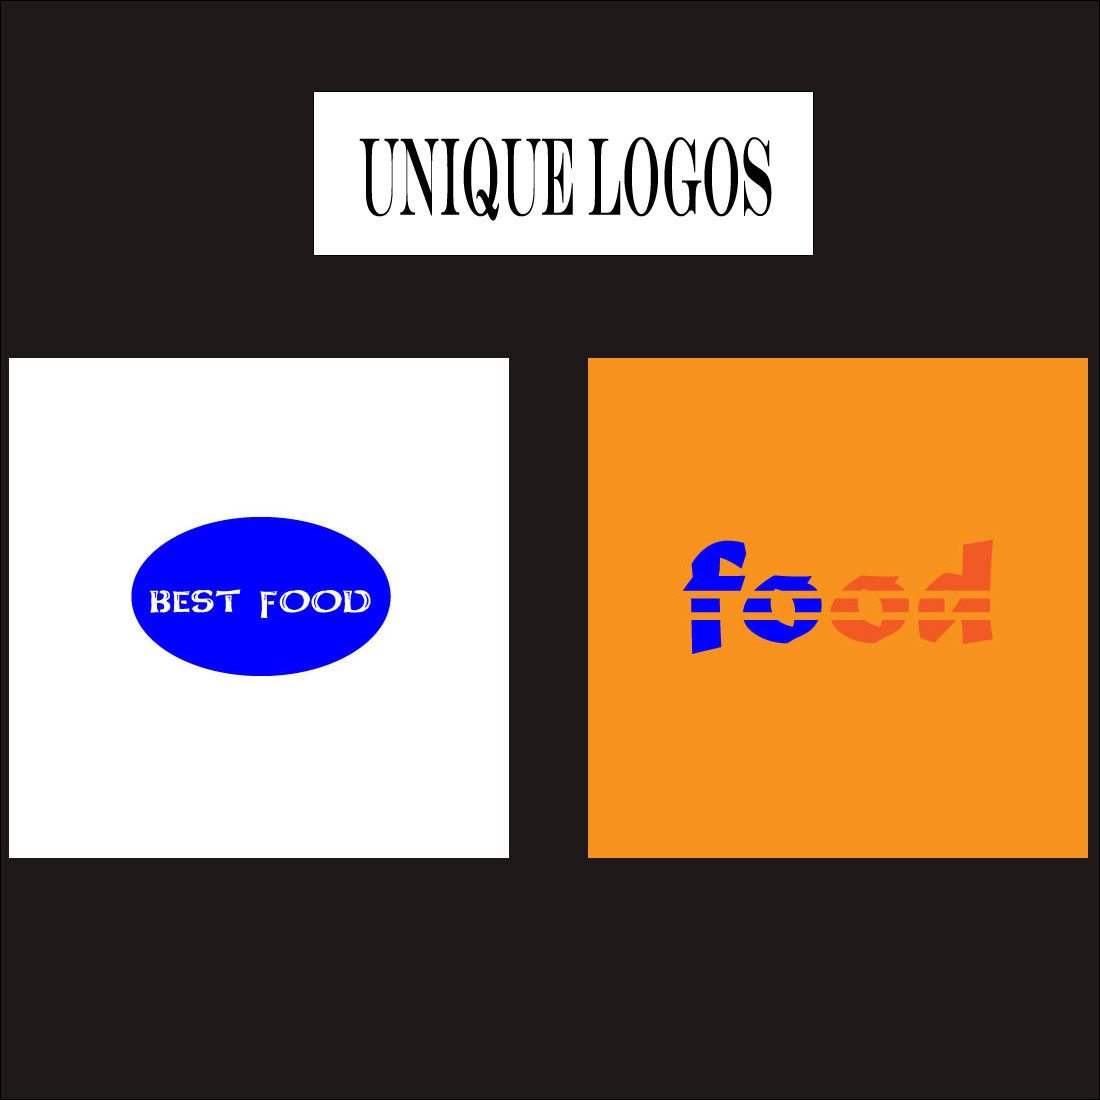 Unique Food Logo cover image.